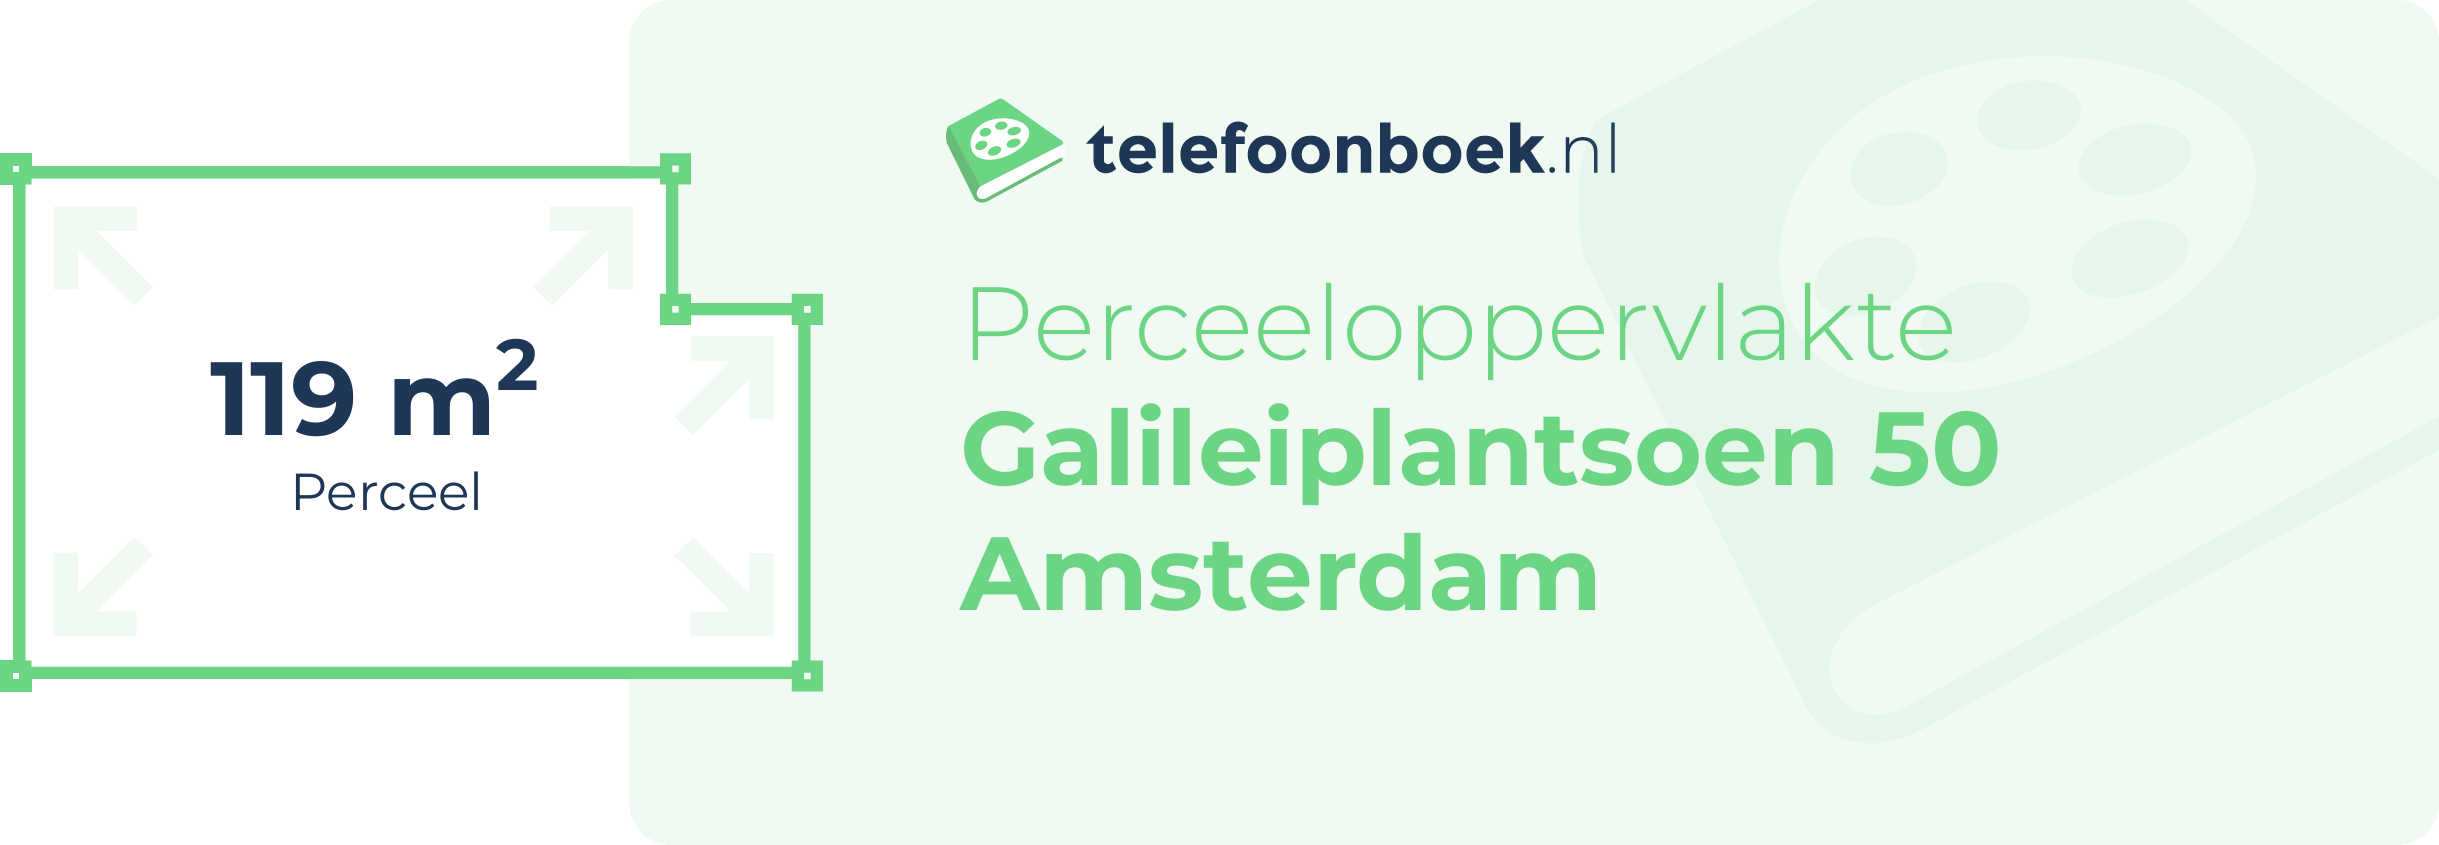 Perceeloppervlakte Galileiplantsoen 50 Amsterdam